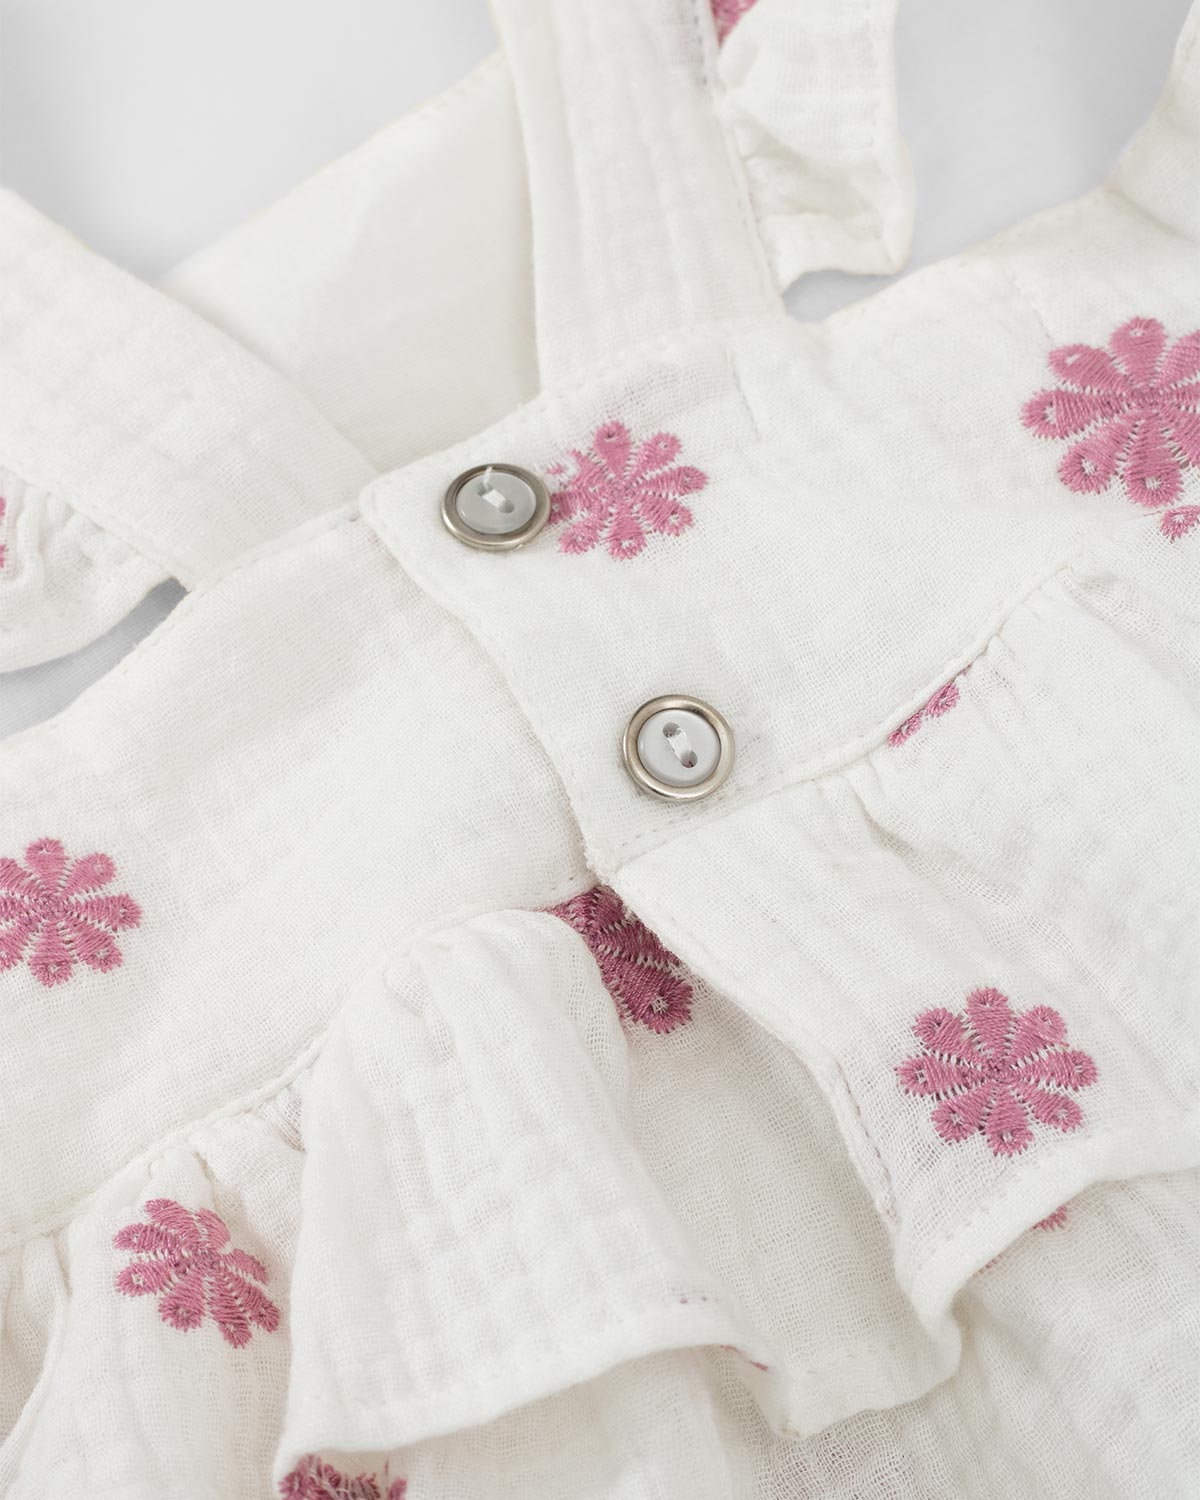 Blusa blanca con detalles bordados, boleros y moño para niña